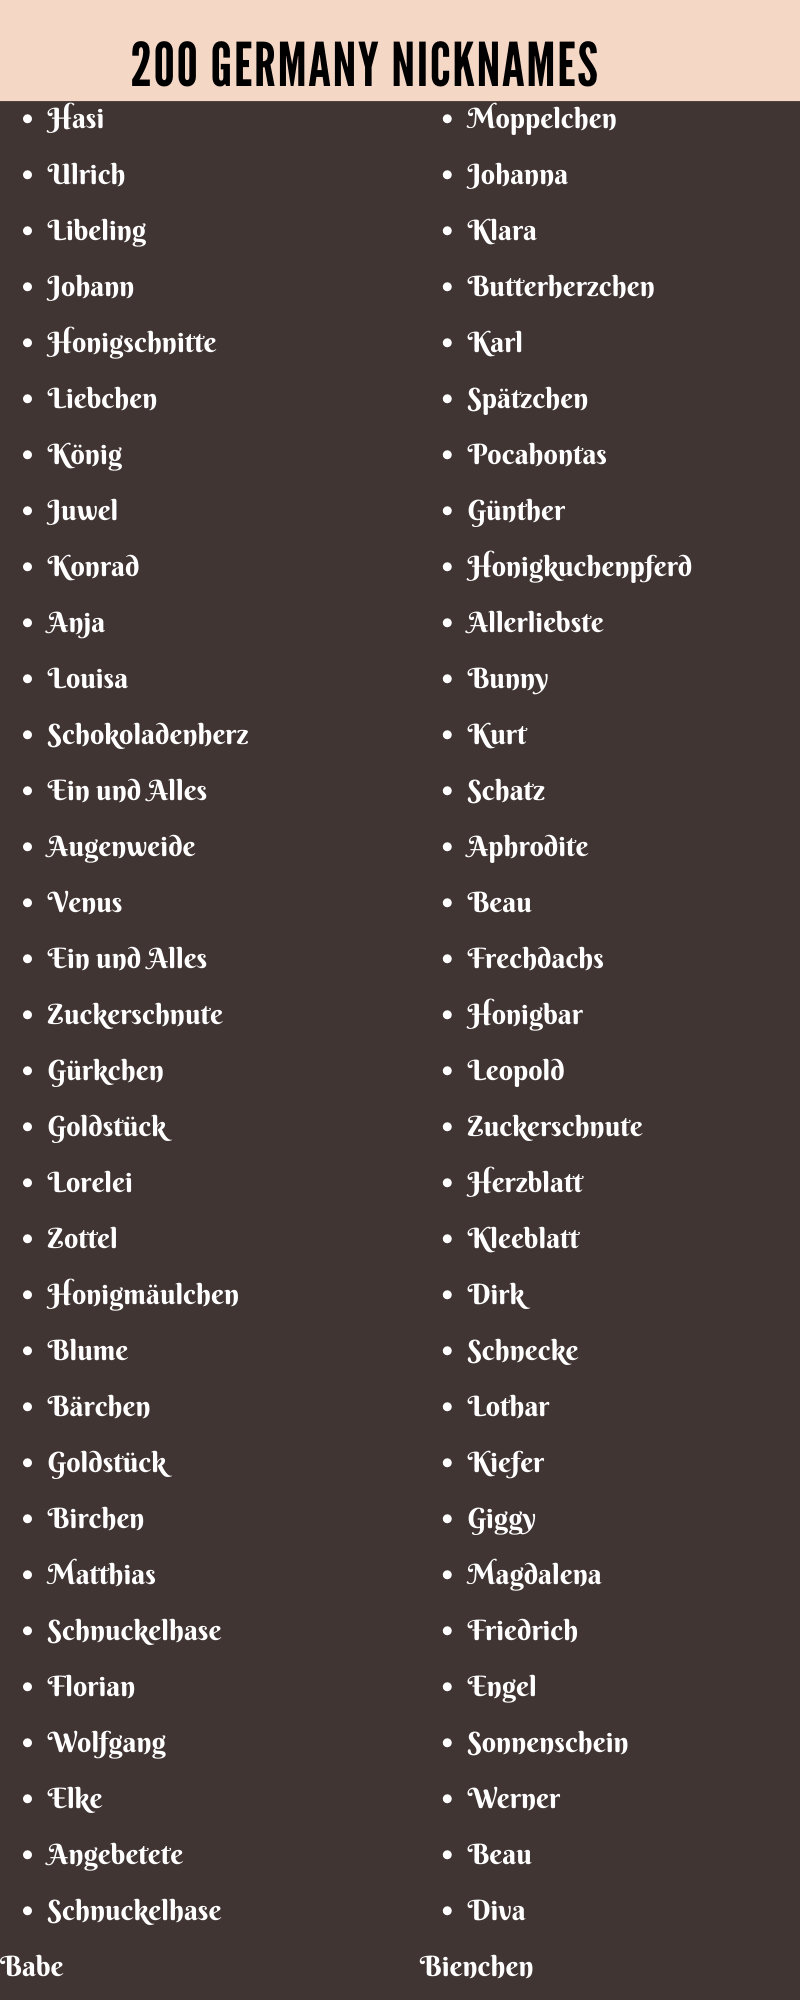 germany nicknames